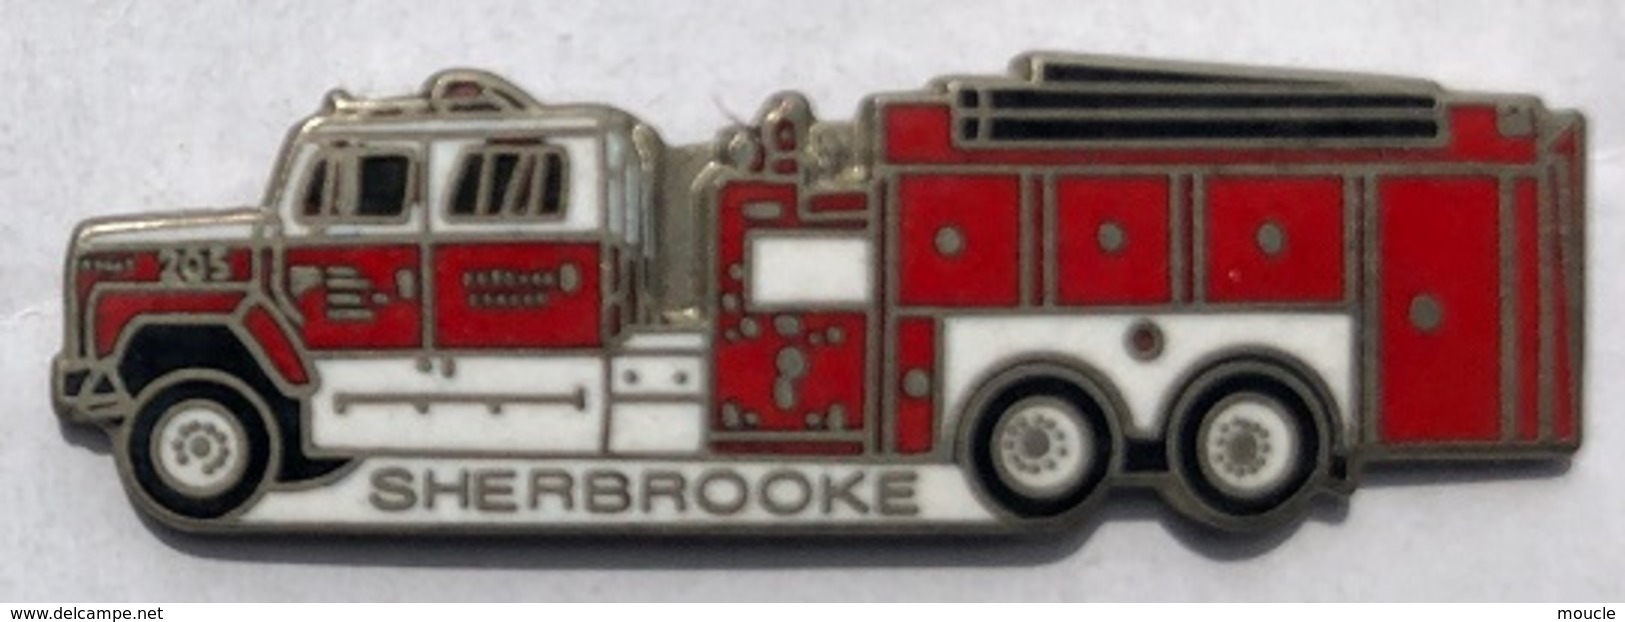 SAPEURS POMPIERS SHERBROOKE  - SERVICE DU FEU - CAMION - TRUCK FIREFIGHTERS - LKW - FEUERWEHRMANN - USA - US - (24) - Brandweerman